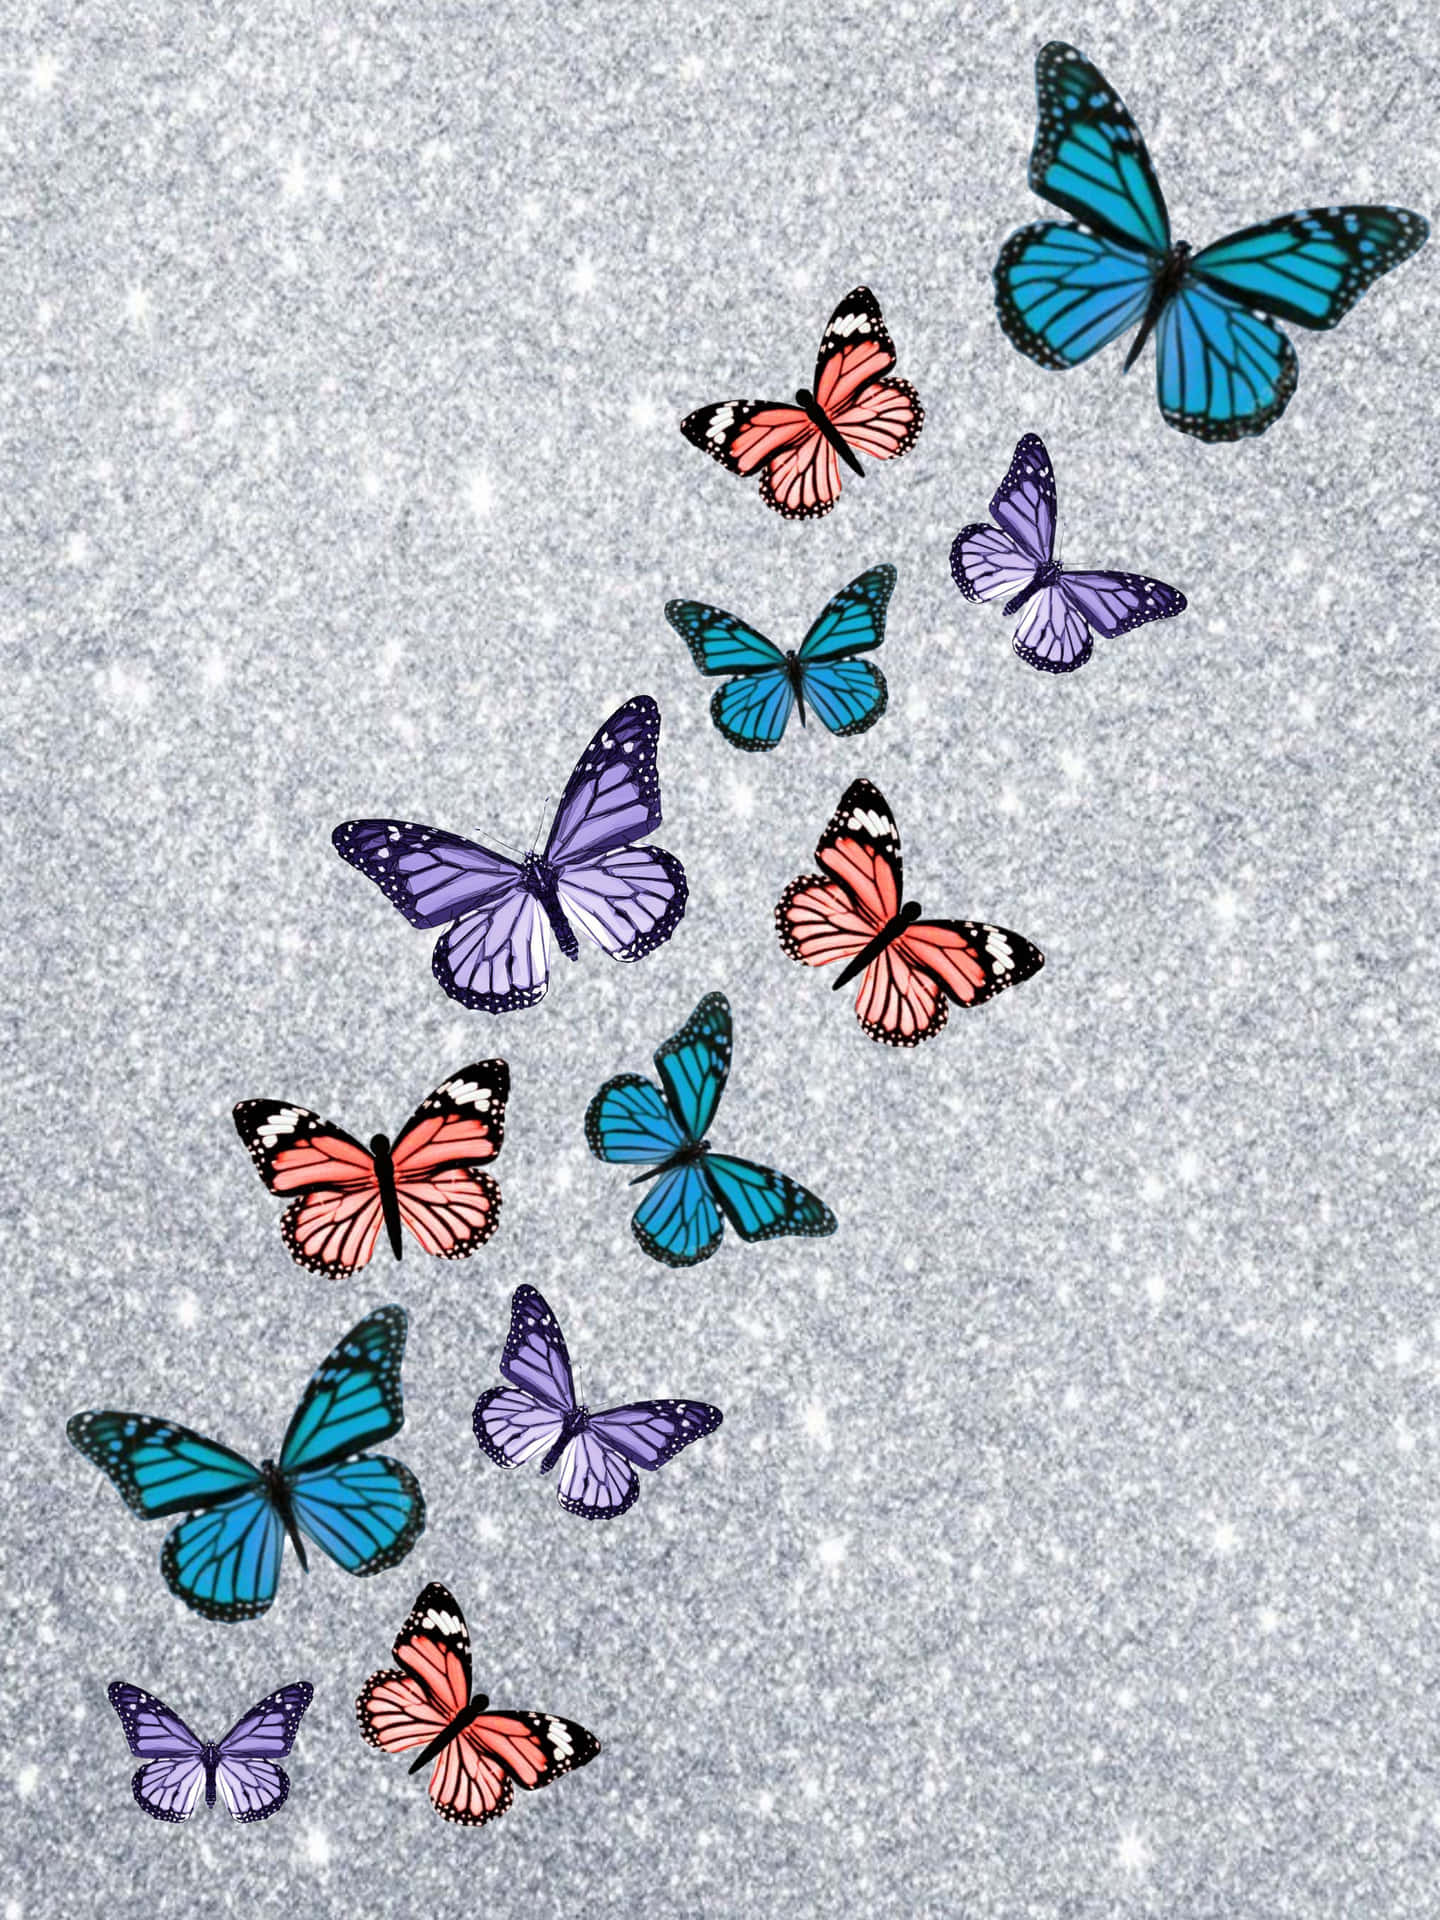 Sparkling Glitter Butterfly Flying Through a Field of Flowers Wallpaper